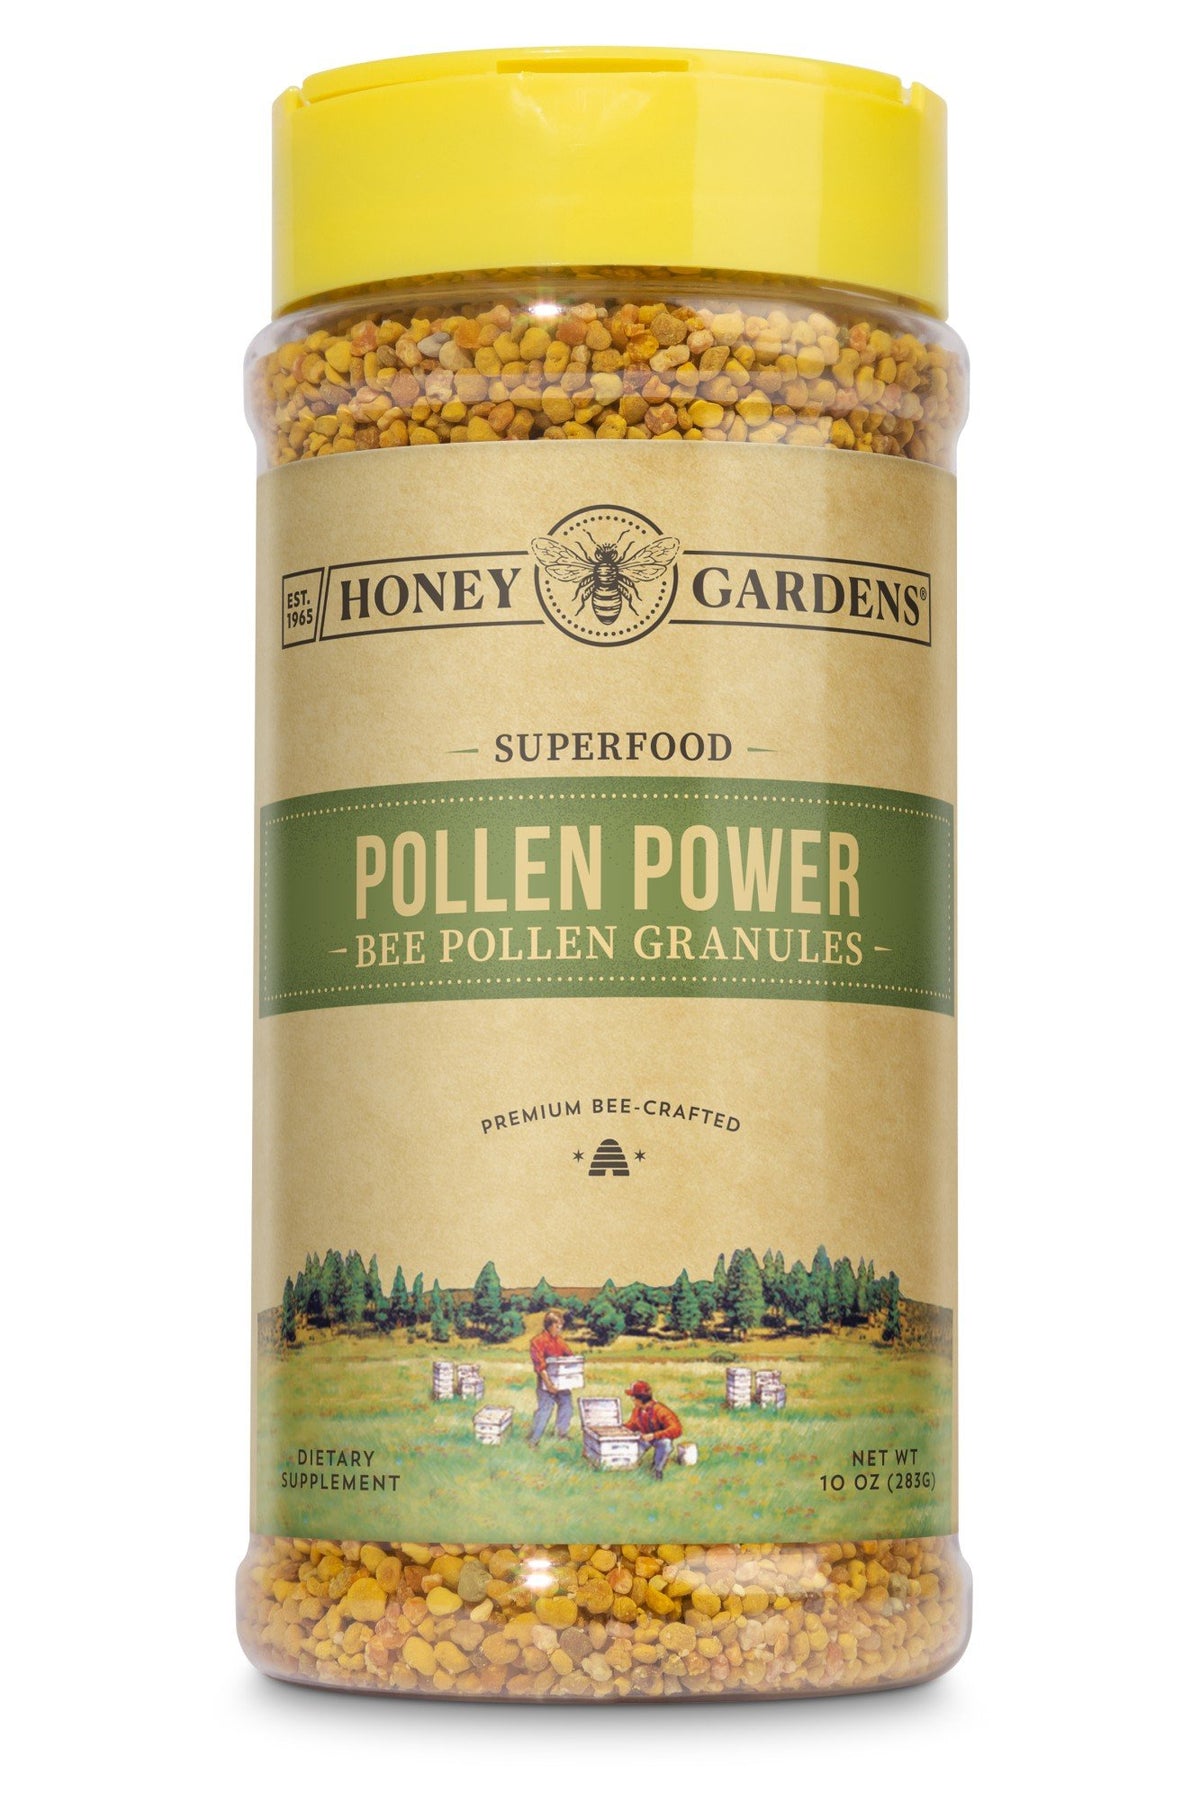 Honey Gardens Superfood-Pollen Power-Bee Pollen Granules 10 oz Granules